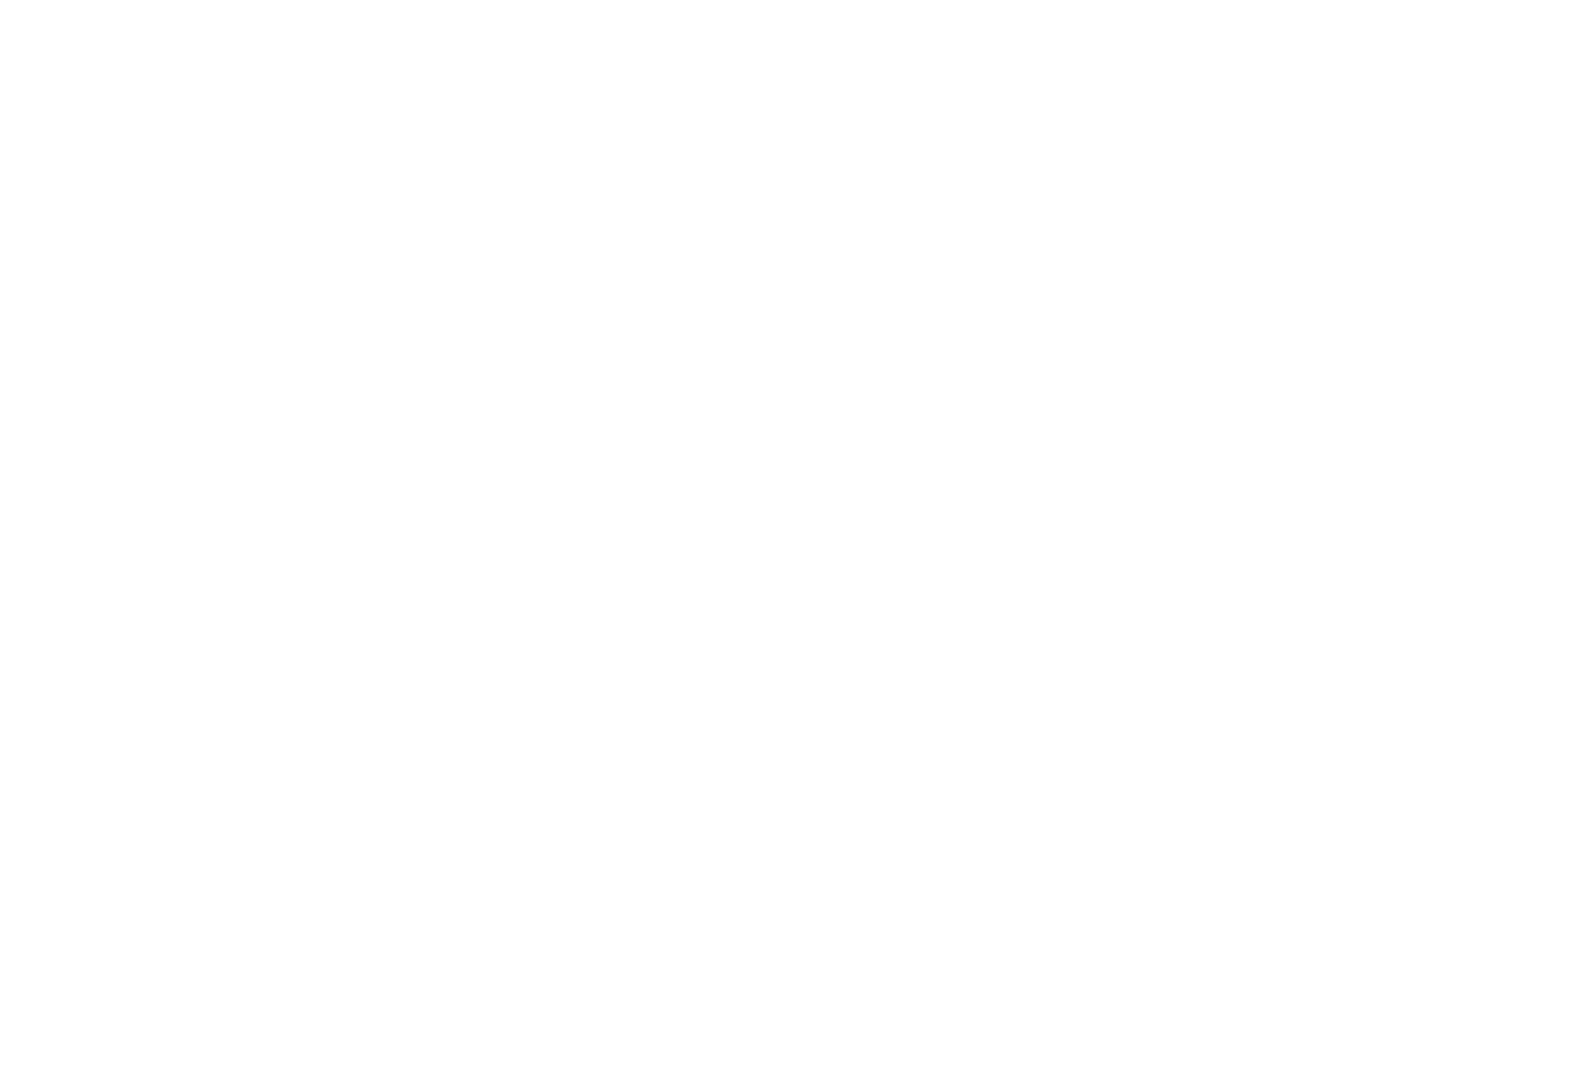 SLCC Logo - College Symbols